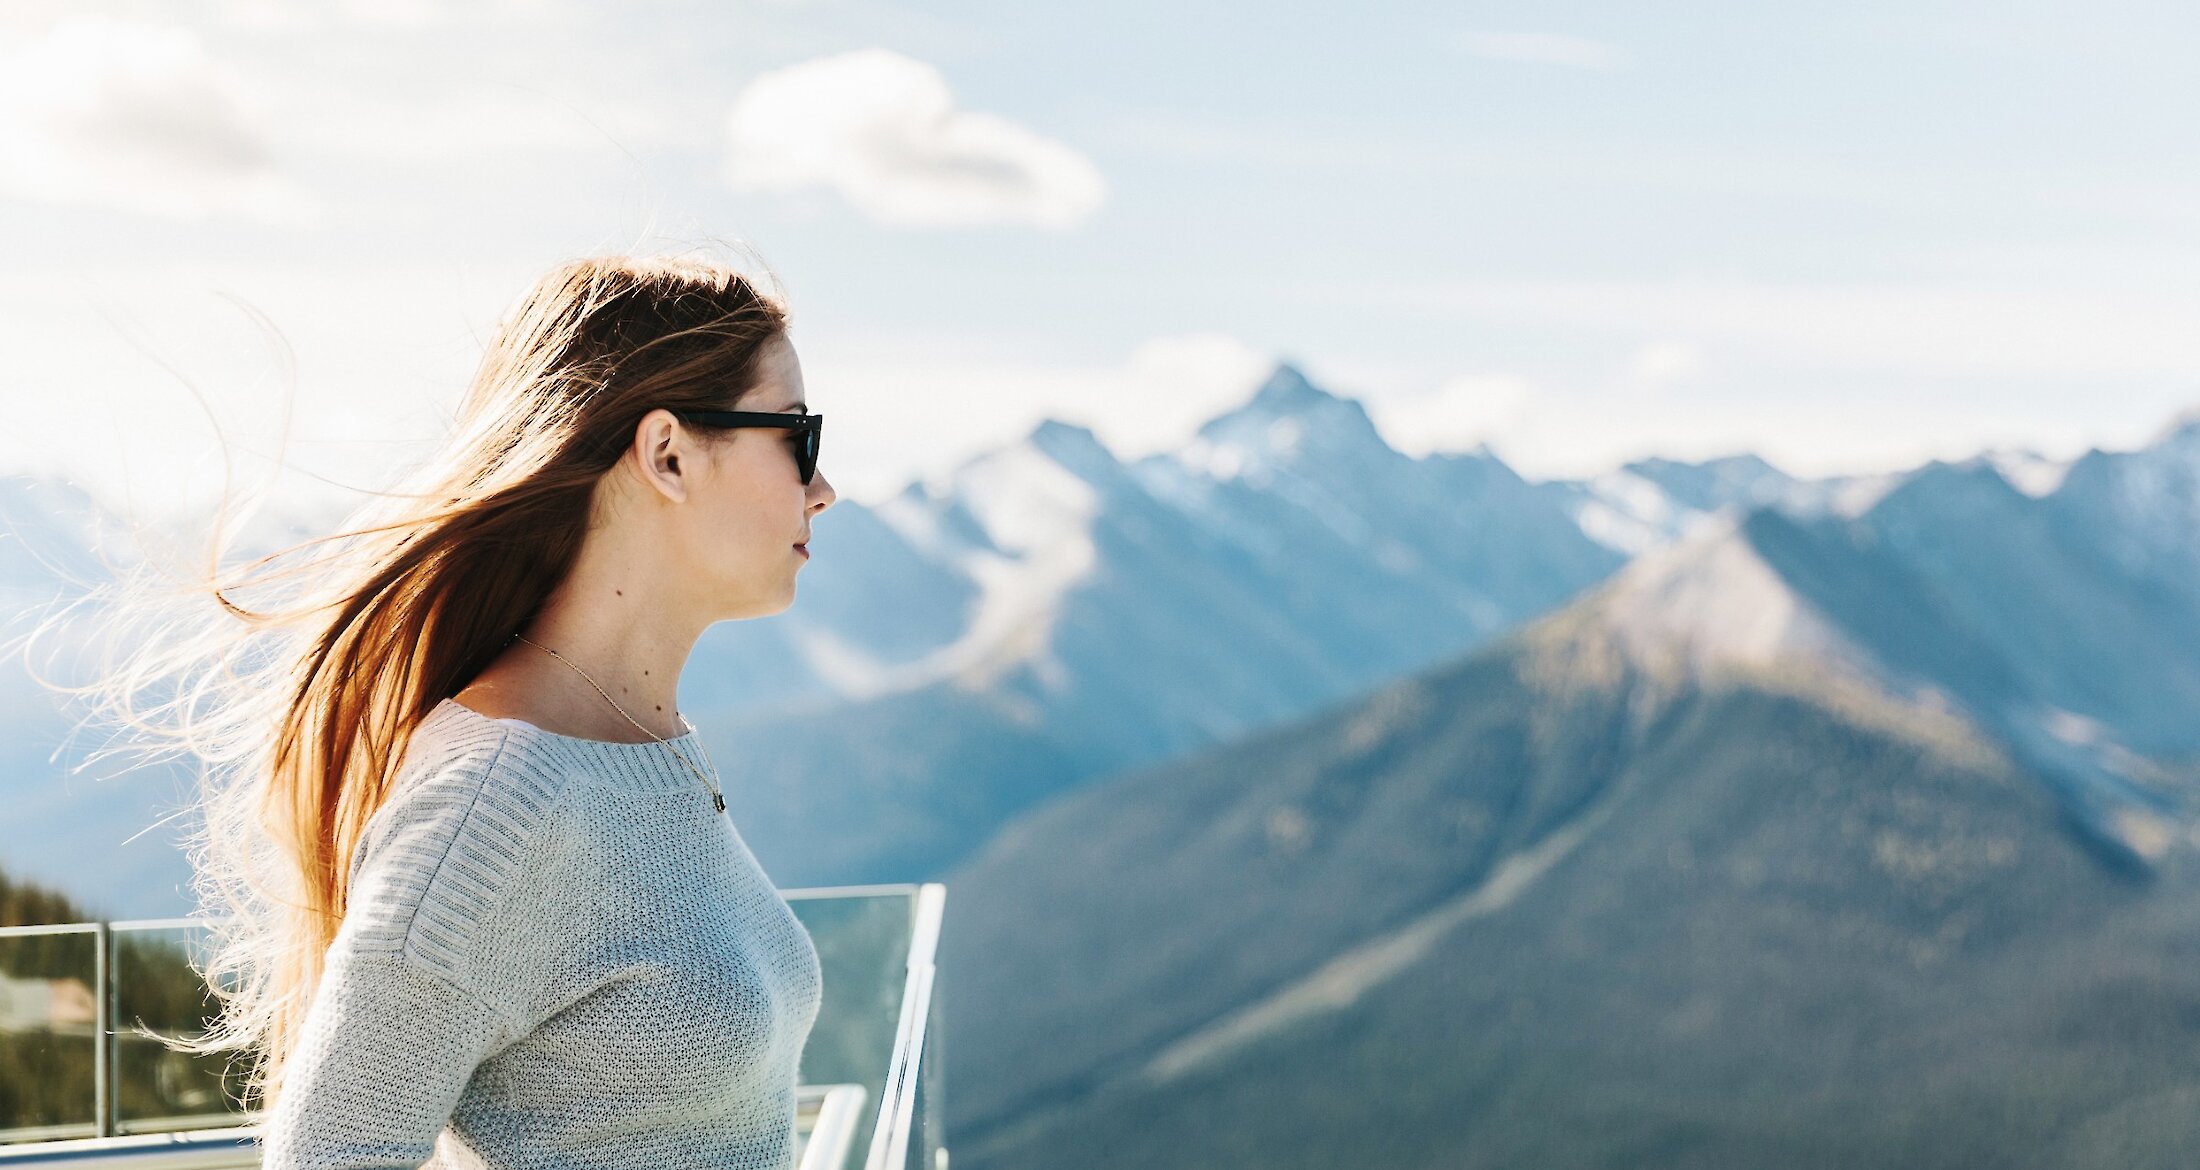 A lady enjoying the view at the Banff Gondola